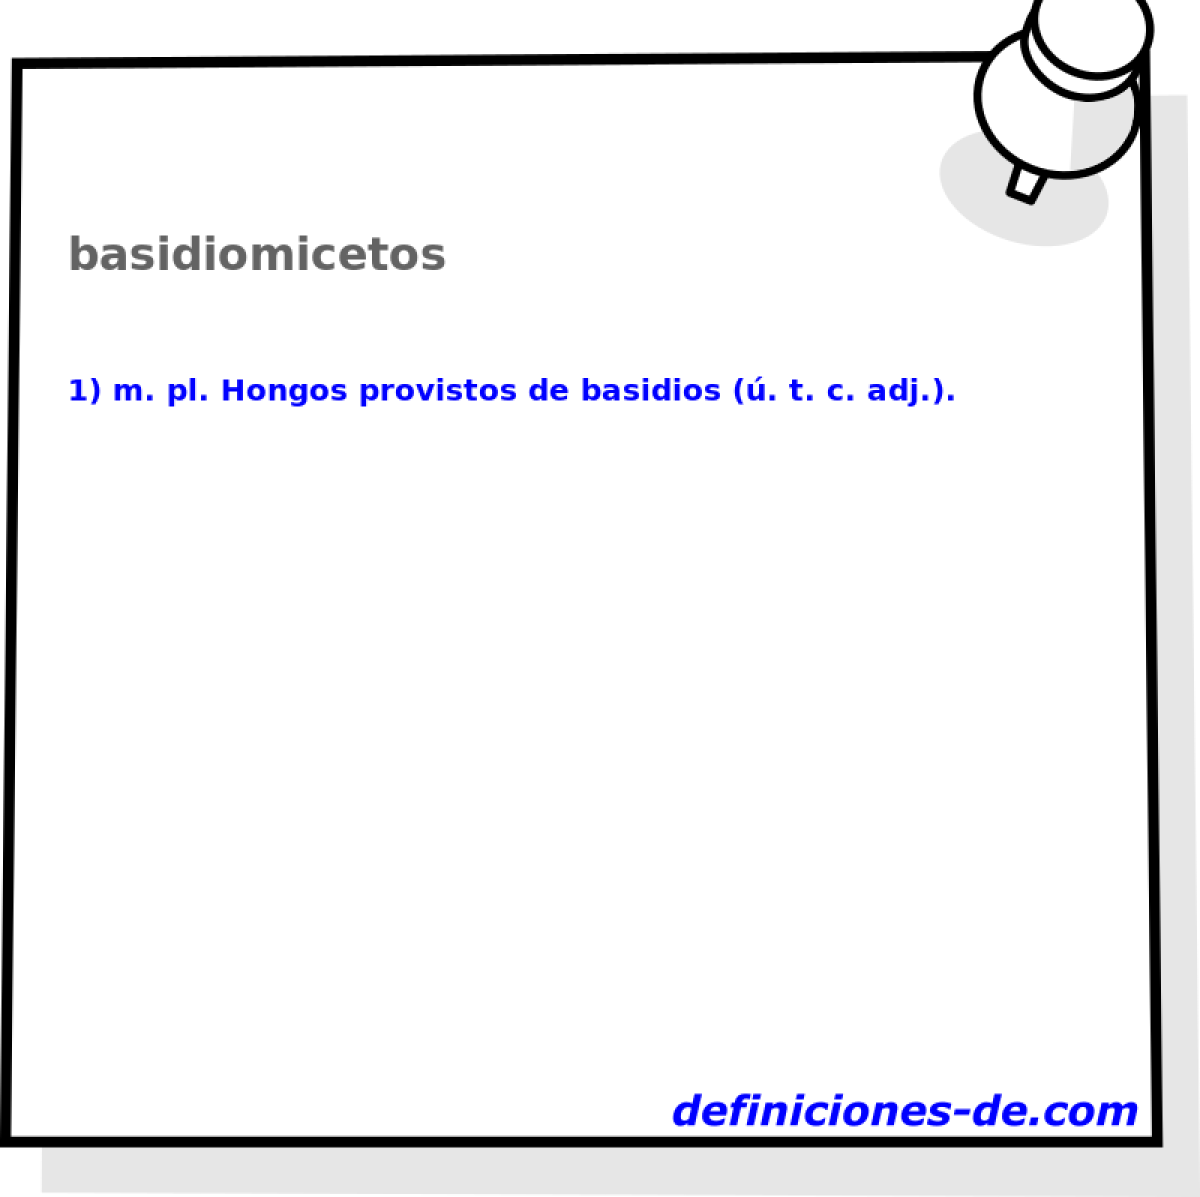 basidiomicetos 